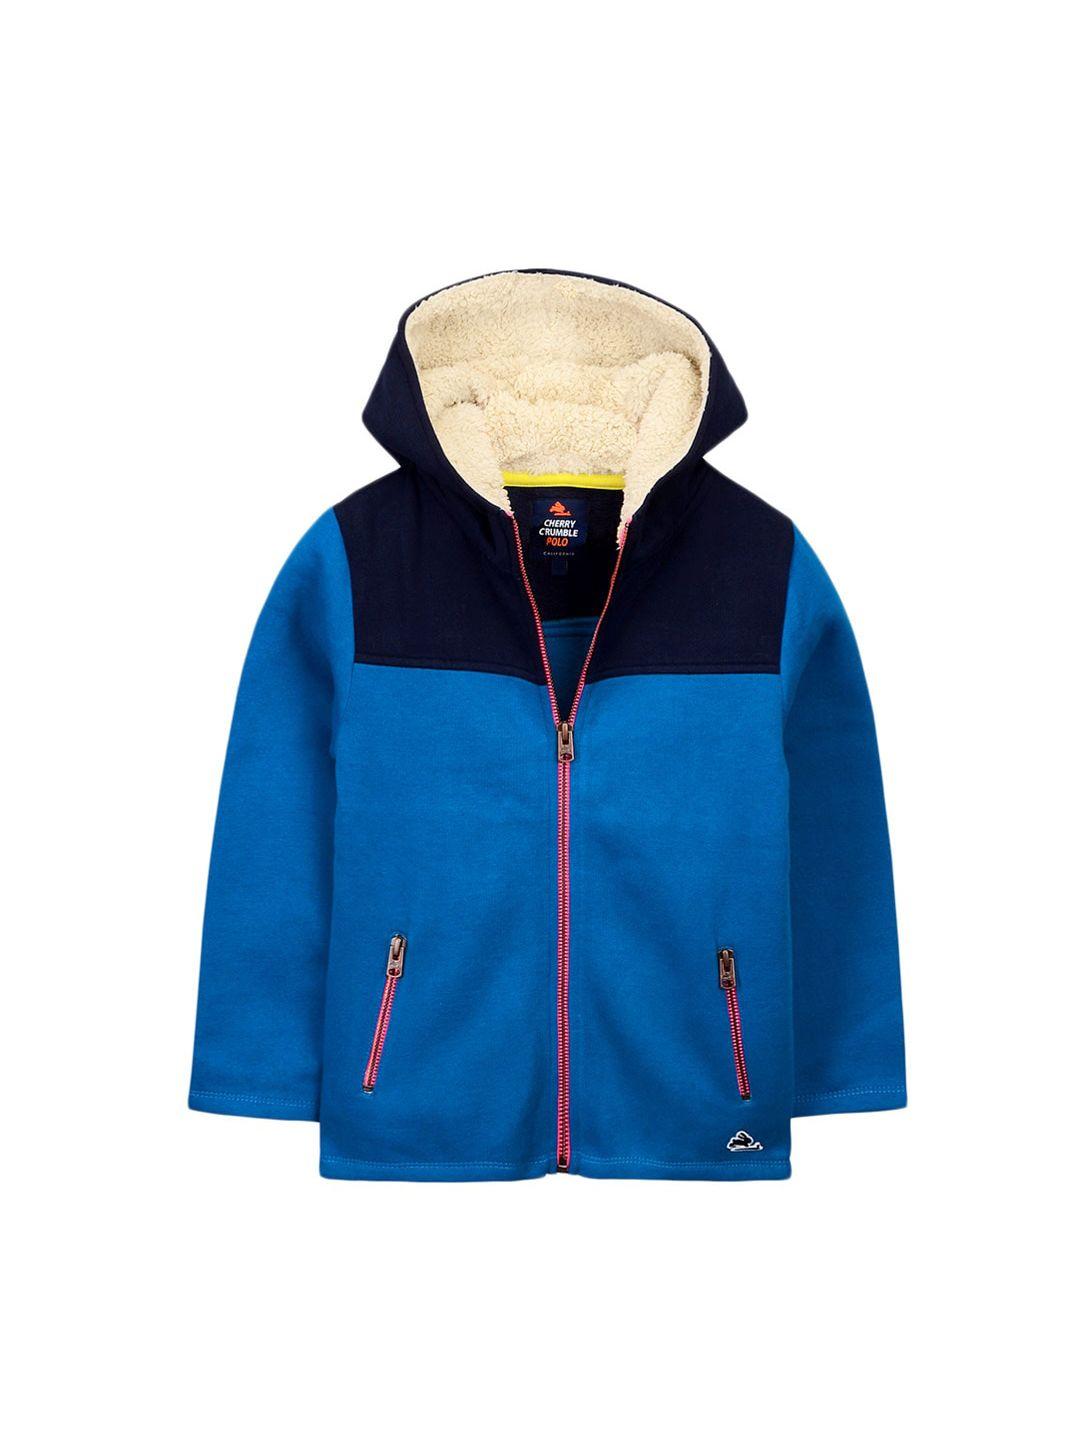 cherry crumble kids blue & navy blue colourblocked hooded front-open sweatshirt